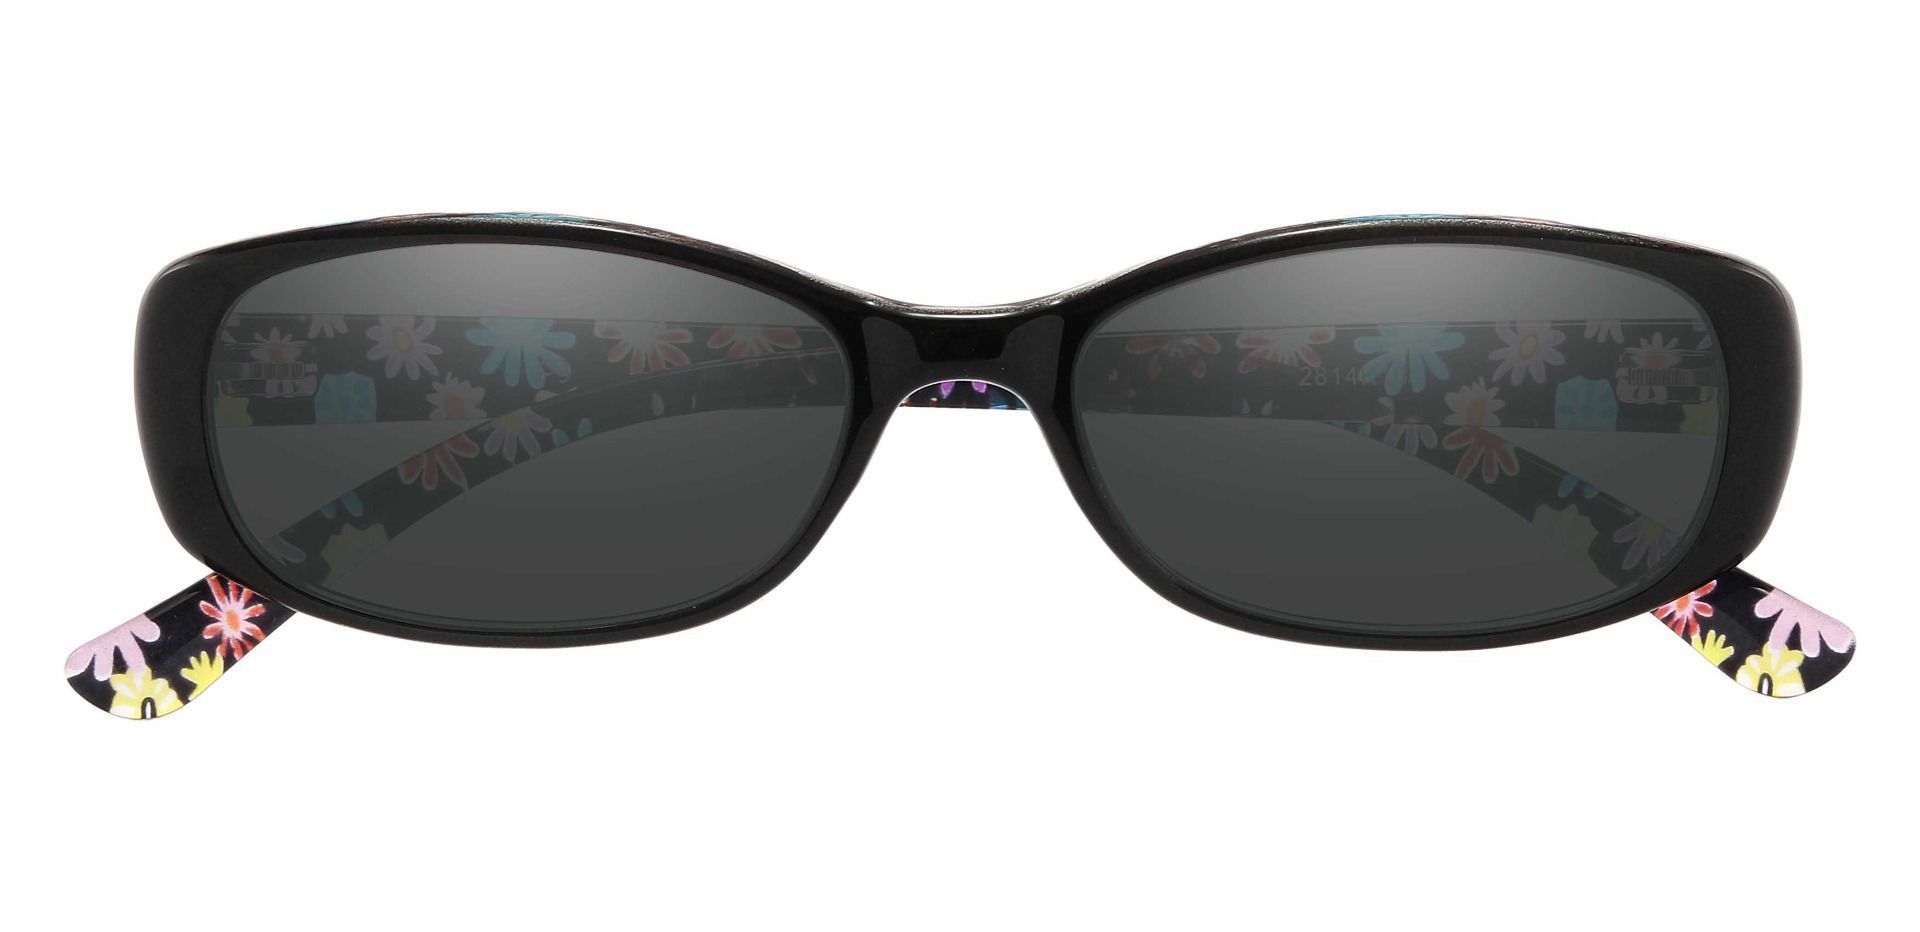 Bethesda Rectangle Reading Sunglasses - Black Frame With Gray Lenses